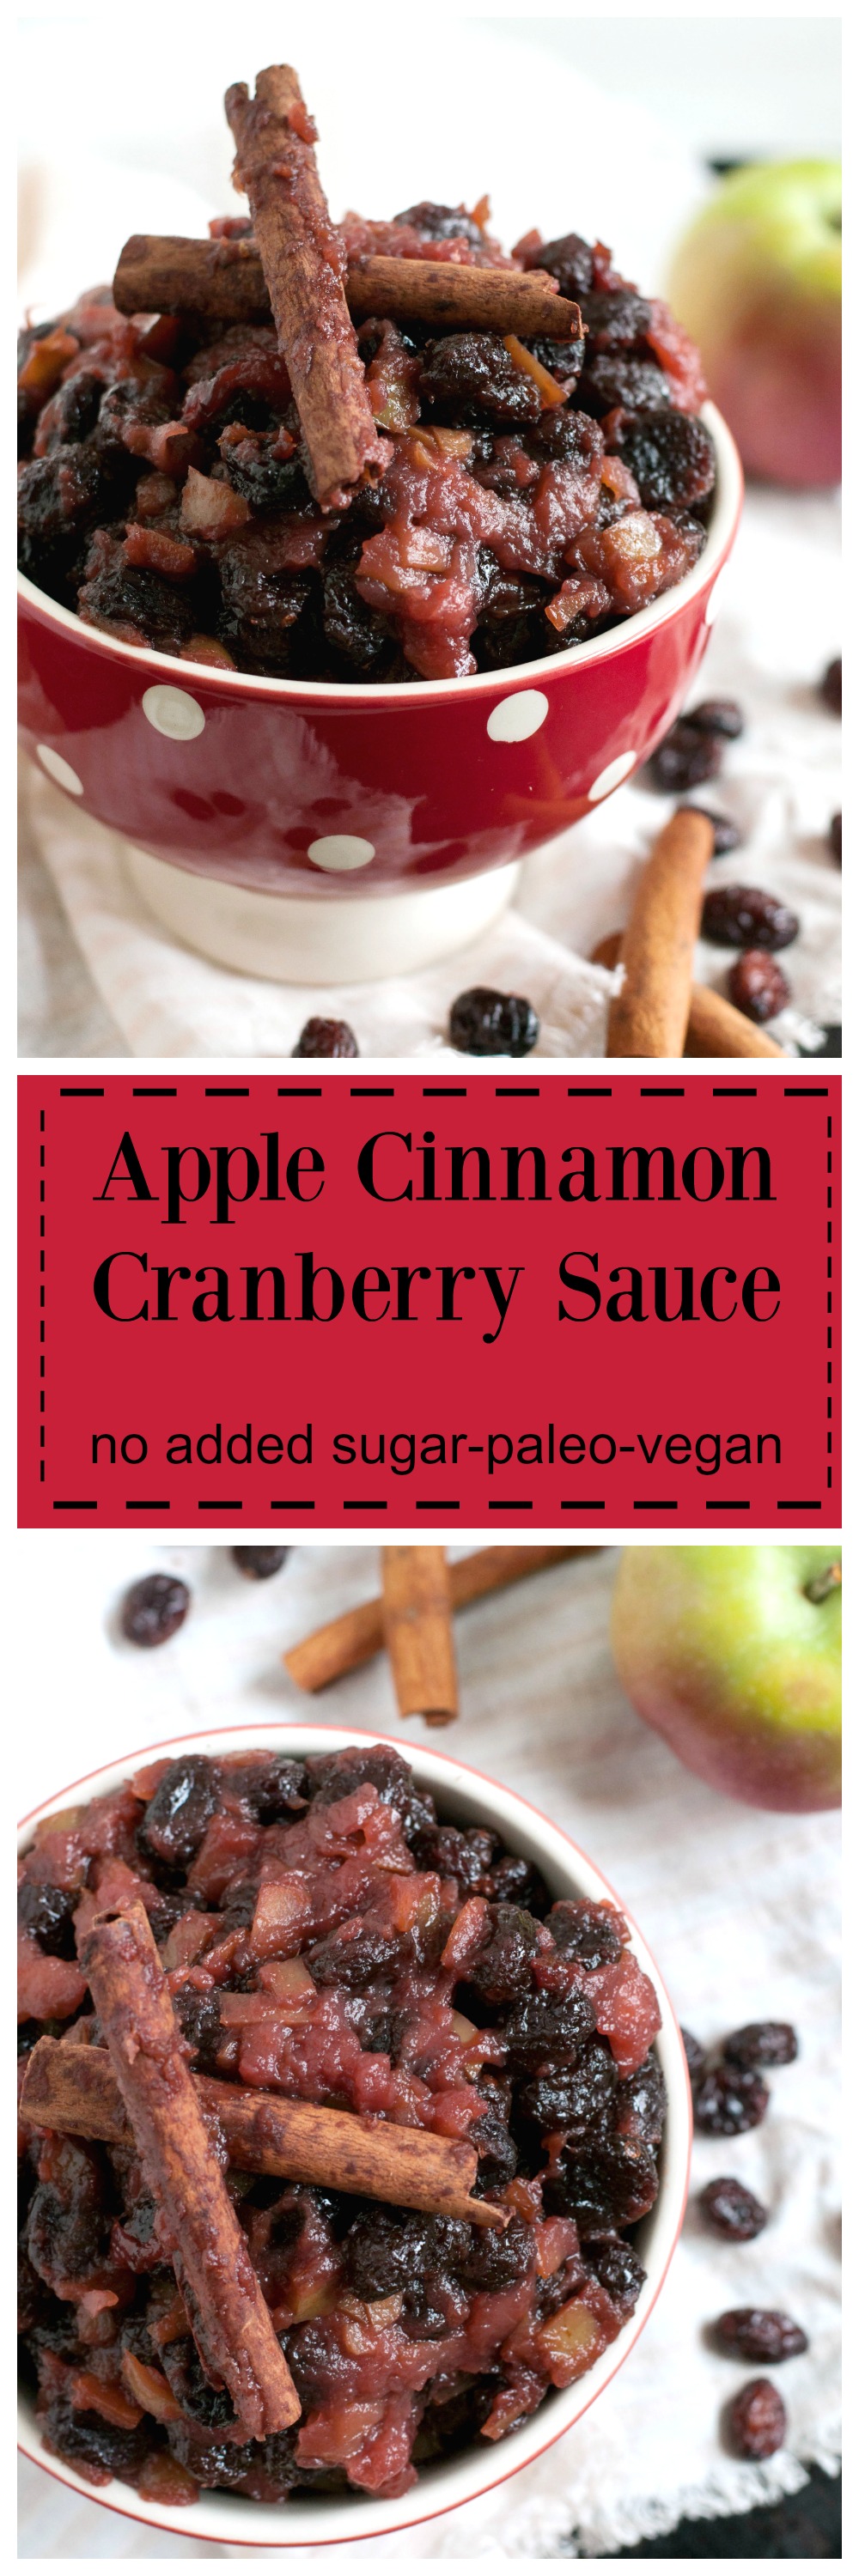 Apple Cinnamon Cranberry Sauce - The Organic Dietitian